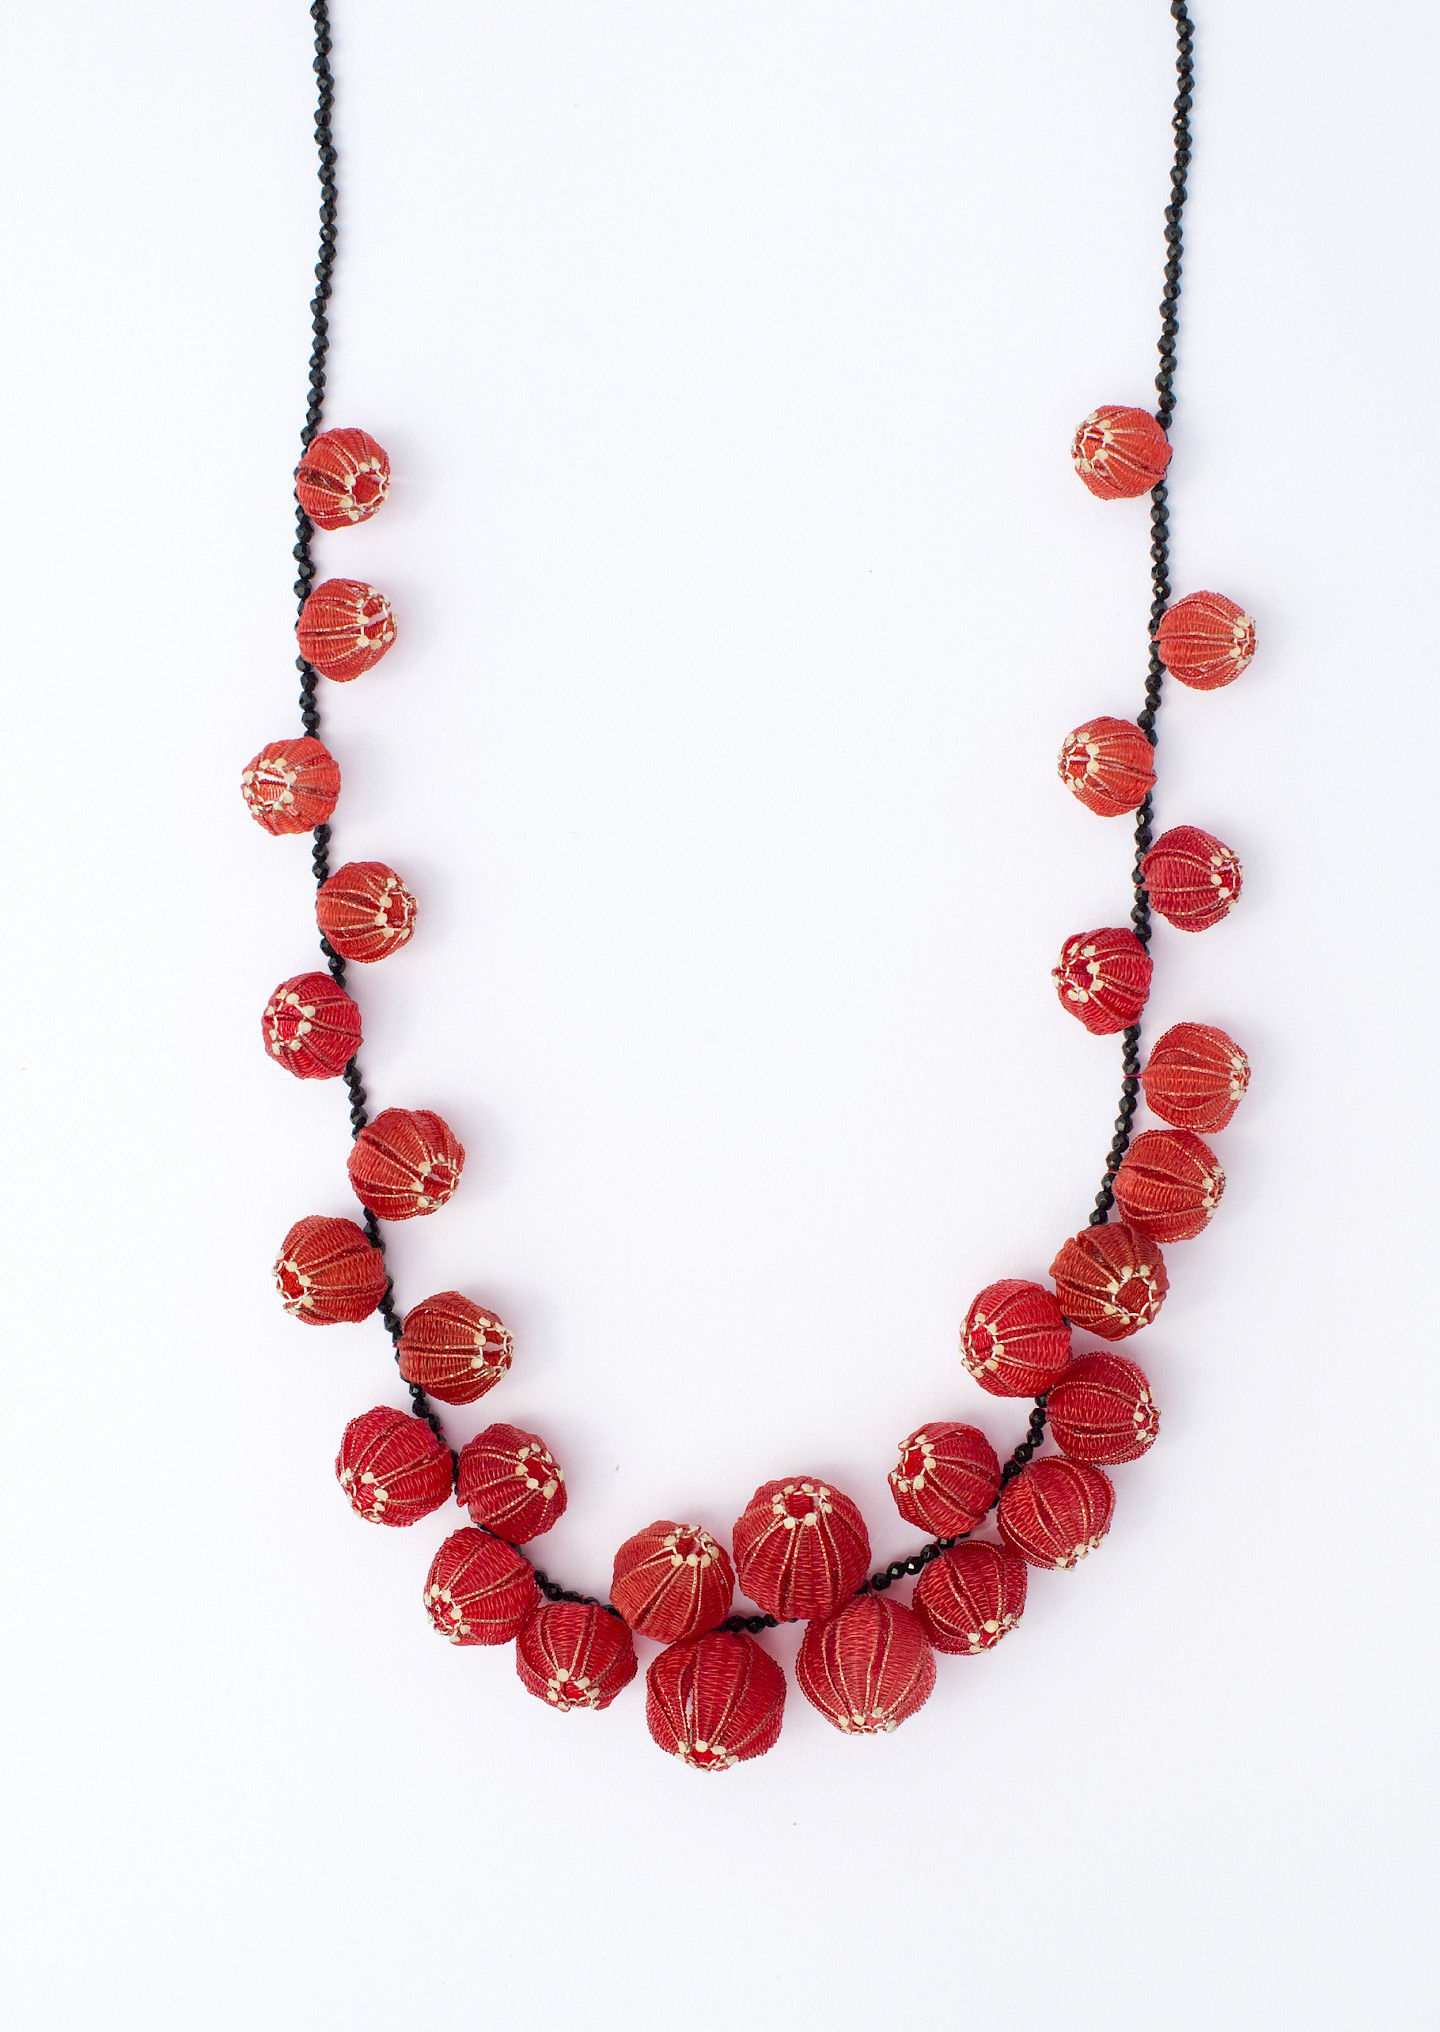 Dorit Schubert: Necklace "Gooseberries", nylon threads, bobbin lace